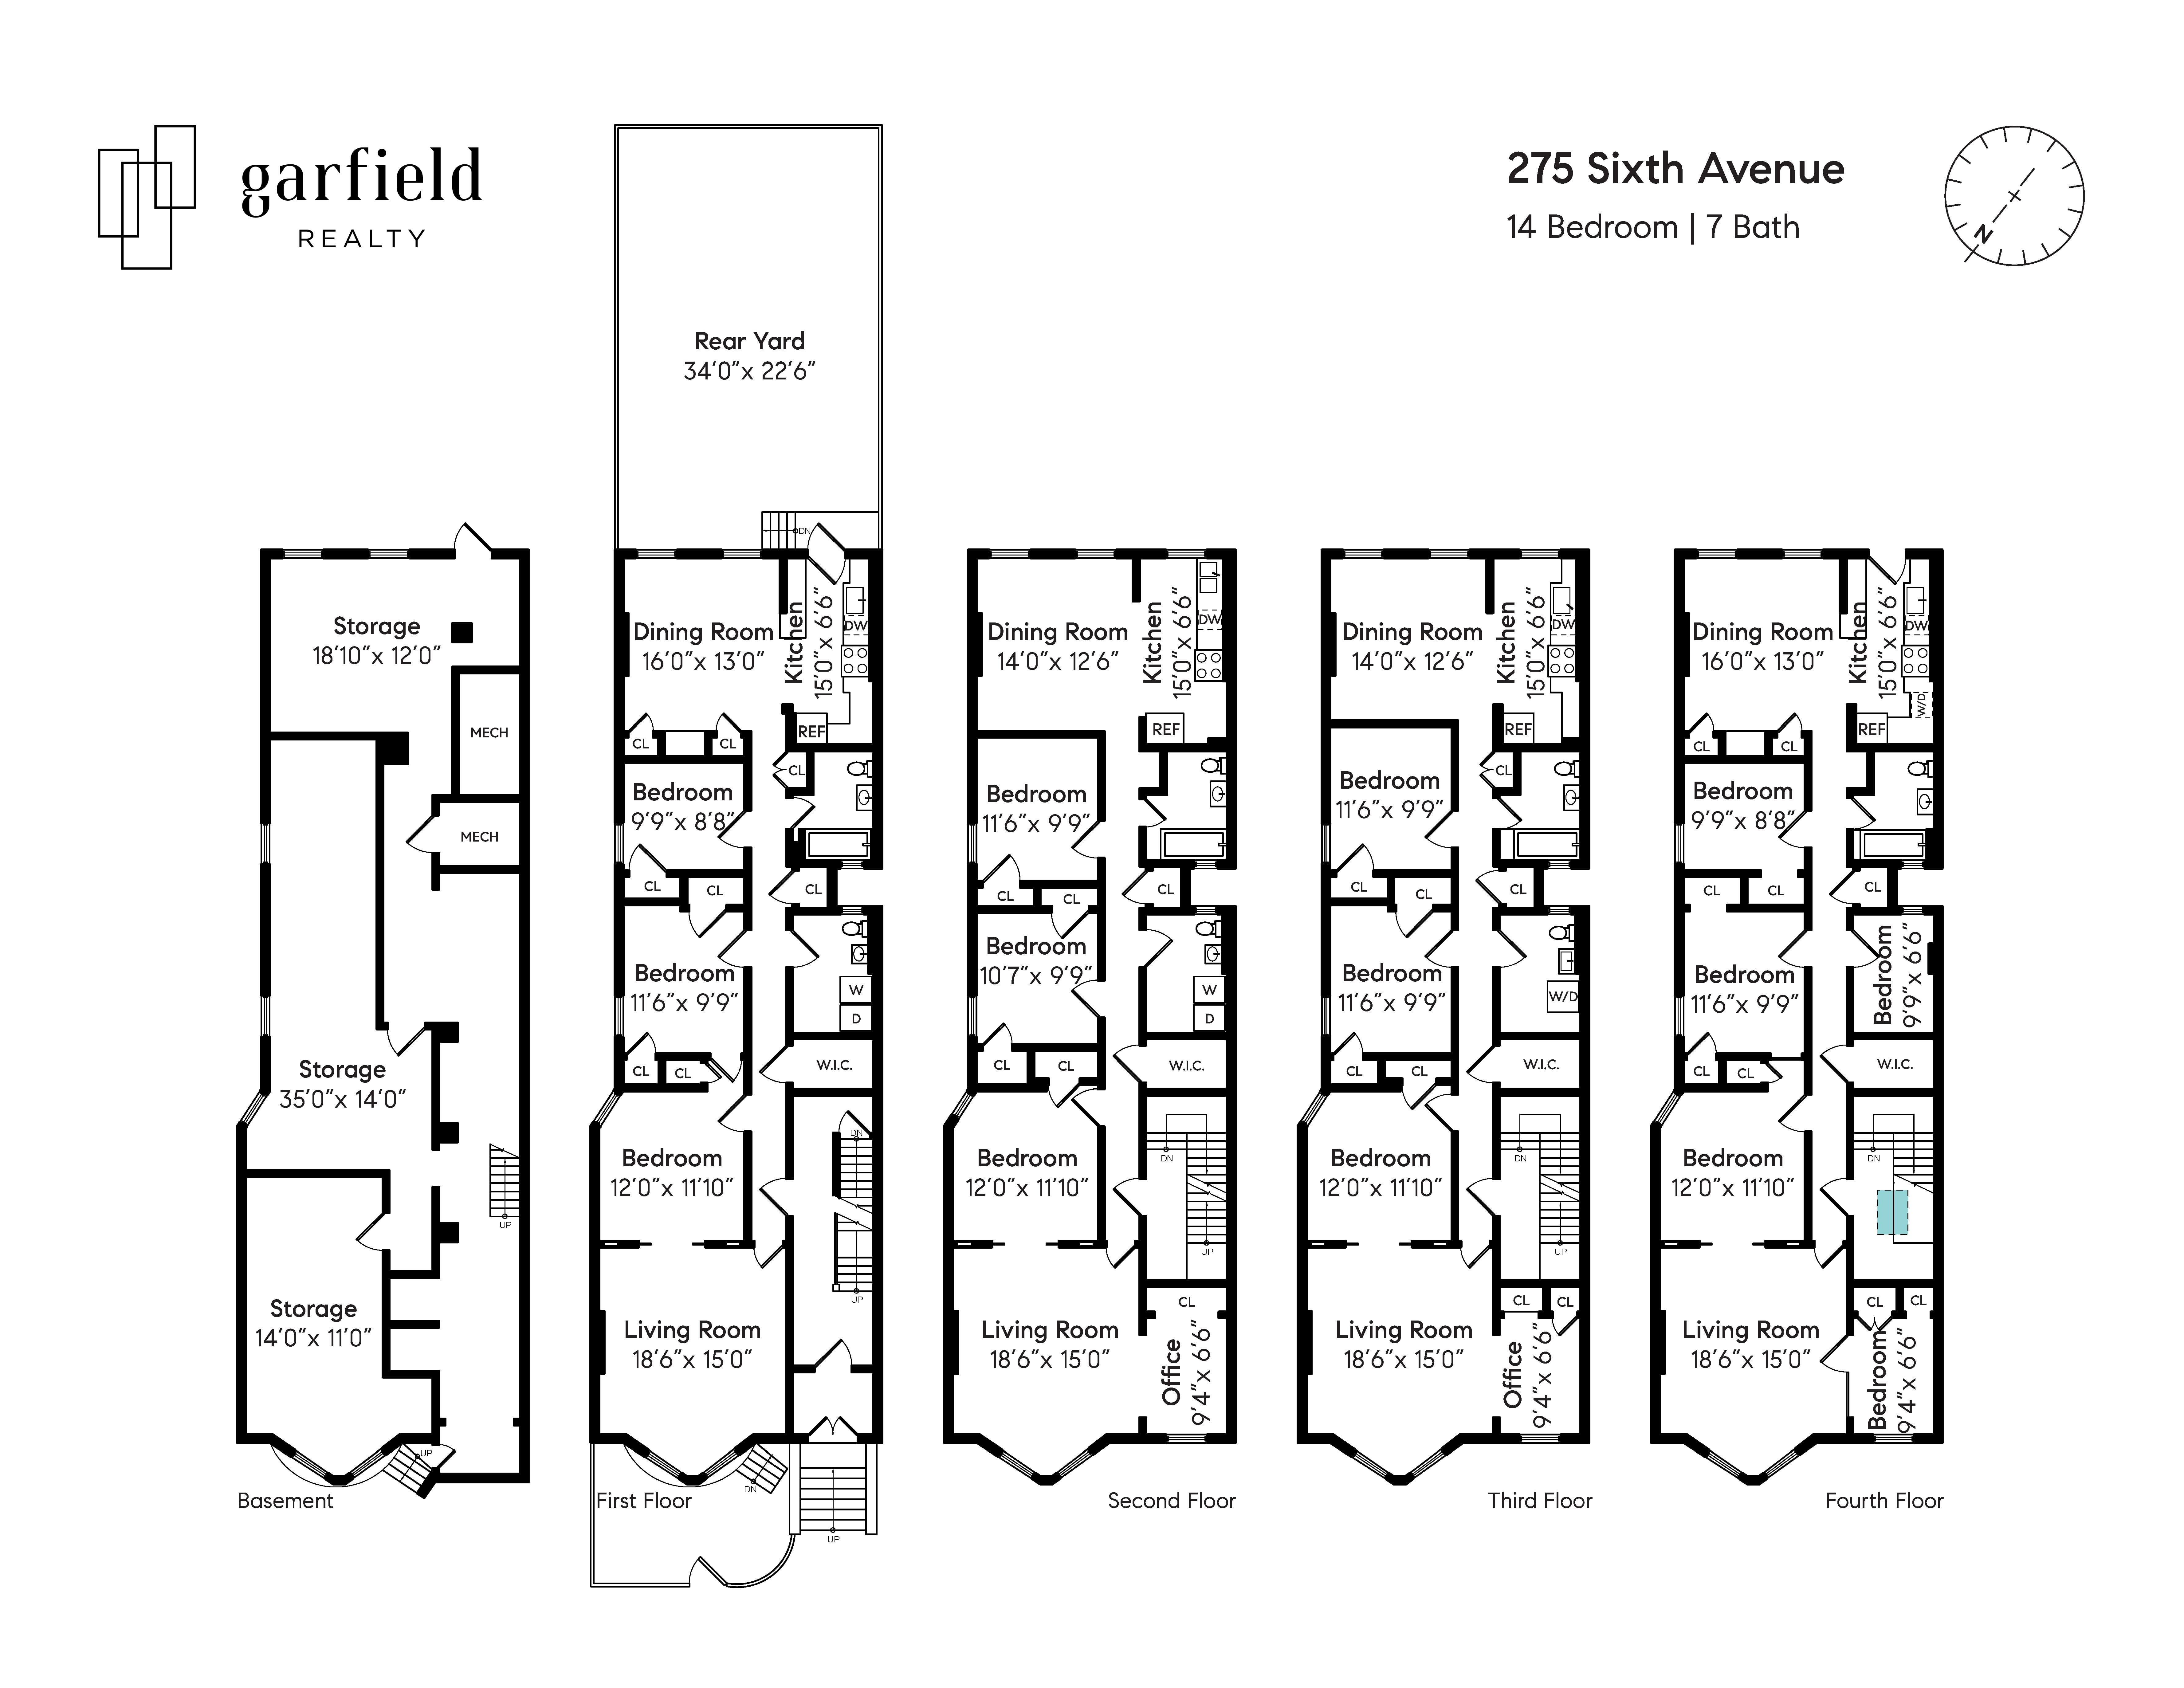 Floorplan of 275 6th Ave